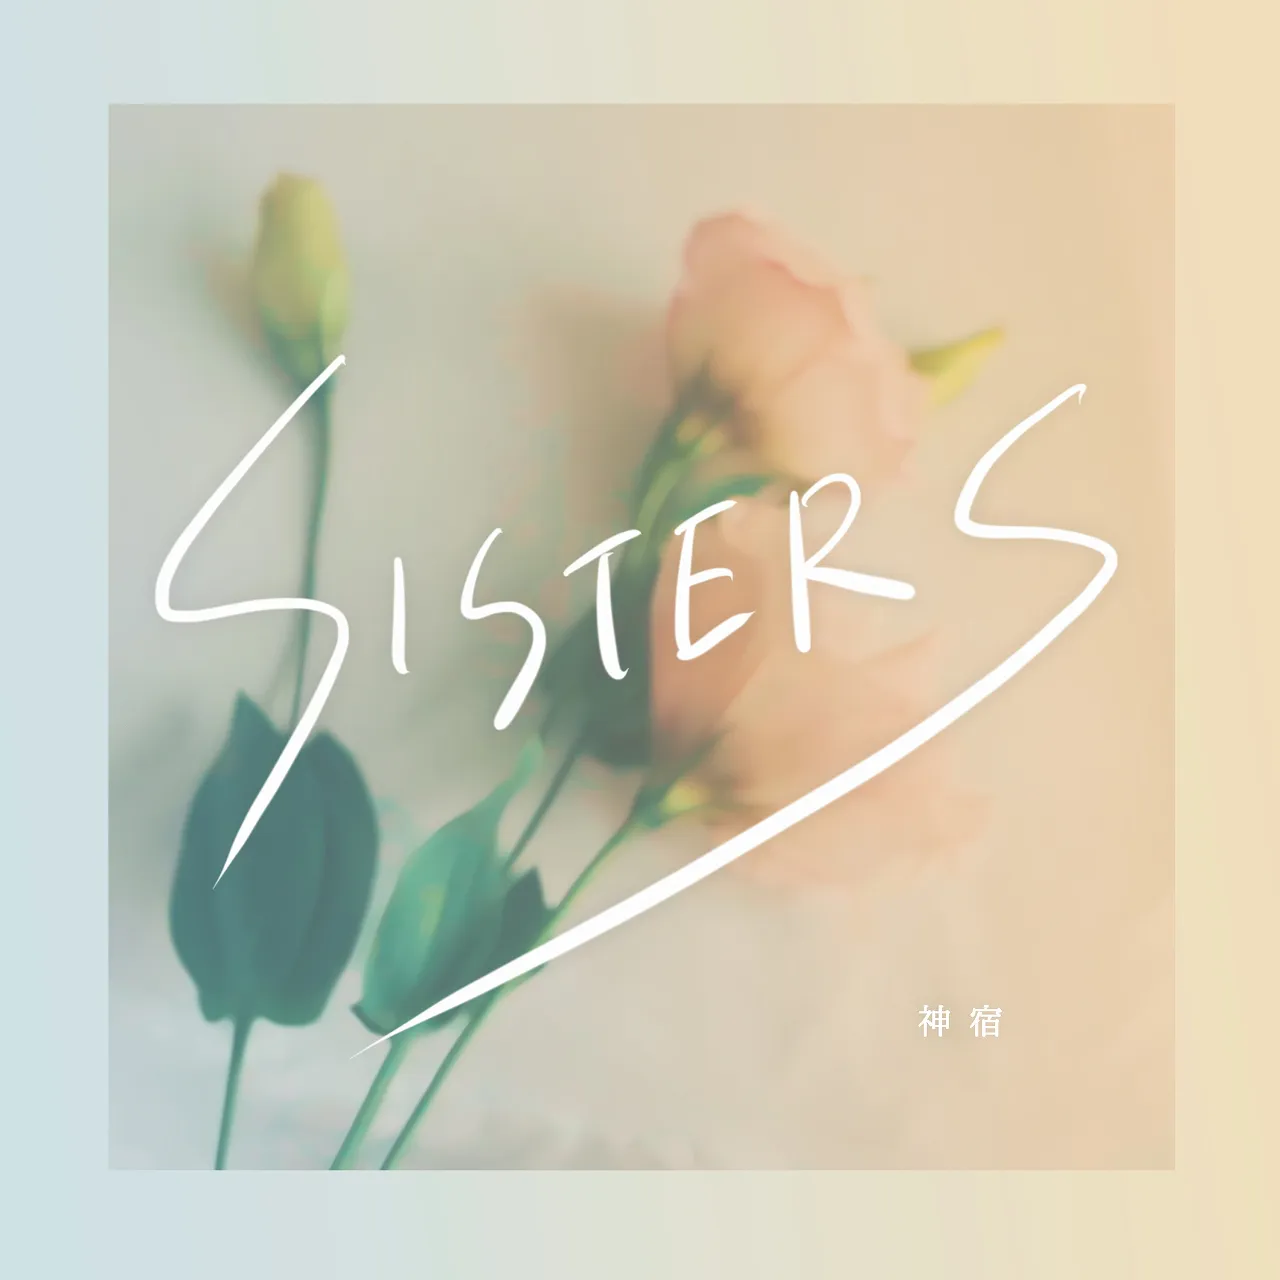 「SISTERS」は羽島姉妹のユニット曲